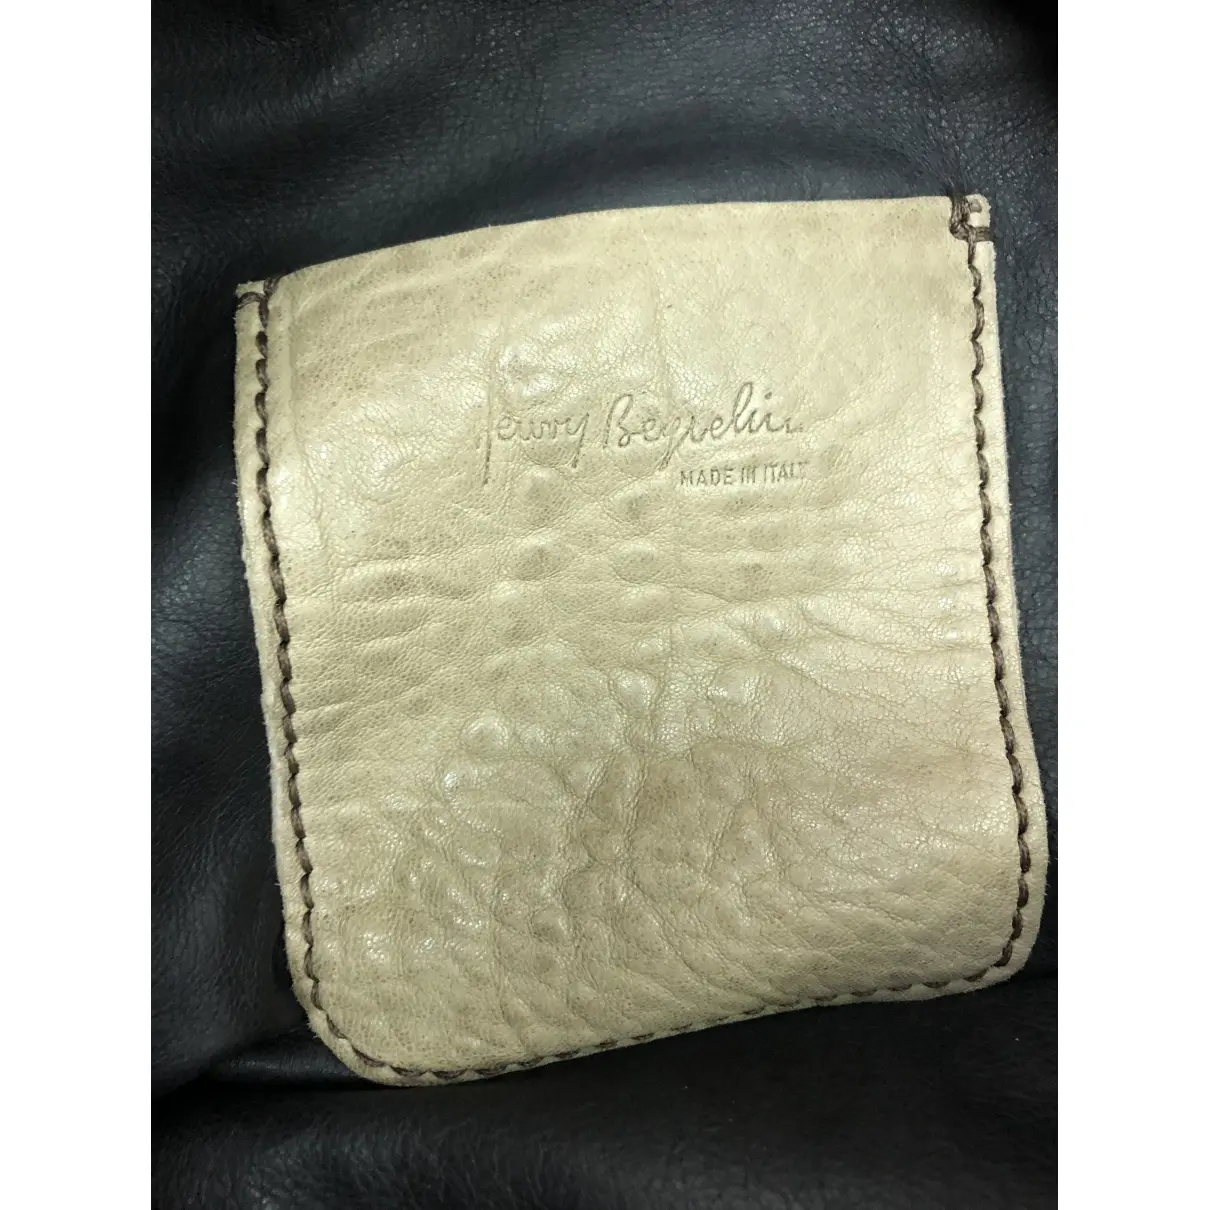 Buy Henry Leather travel bag online